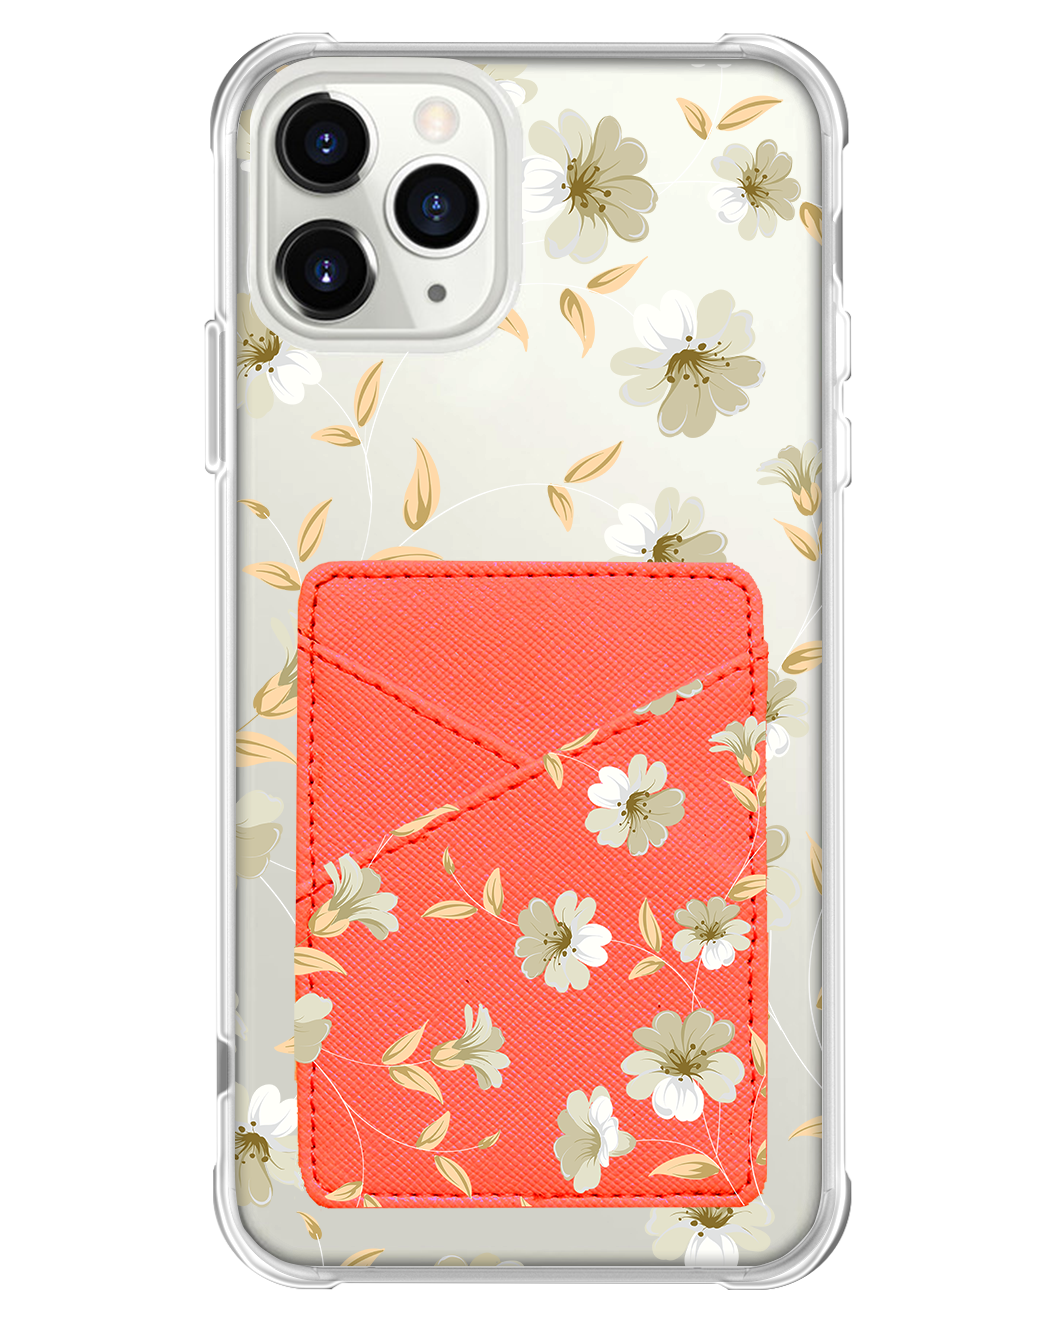 iPhone Phone Wallet Case - White Magnolia 2.0